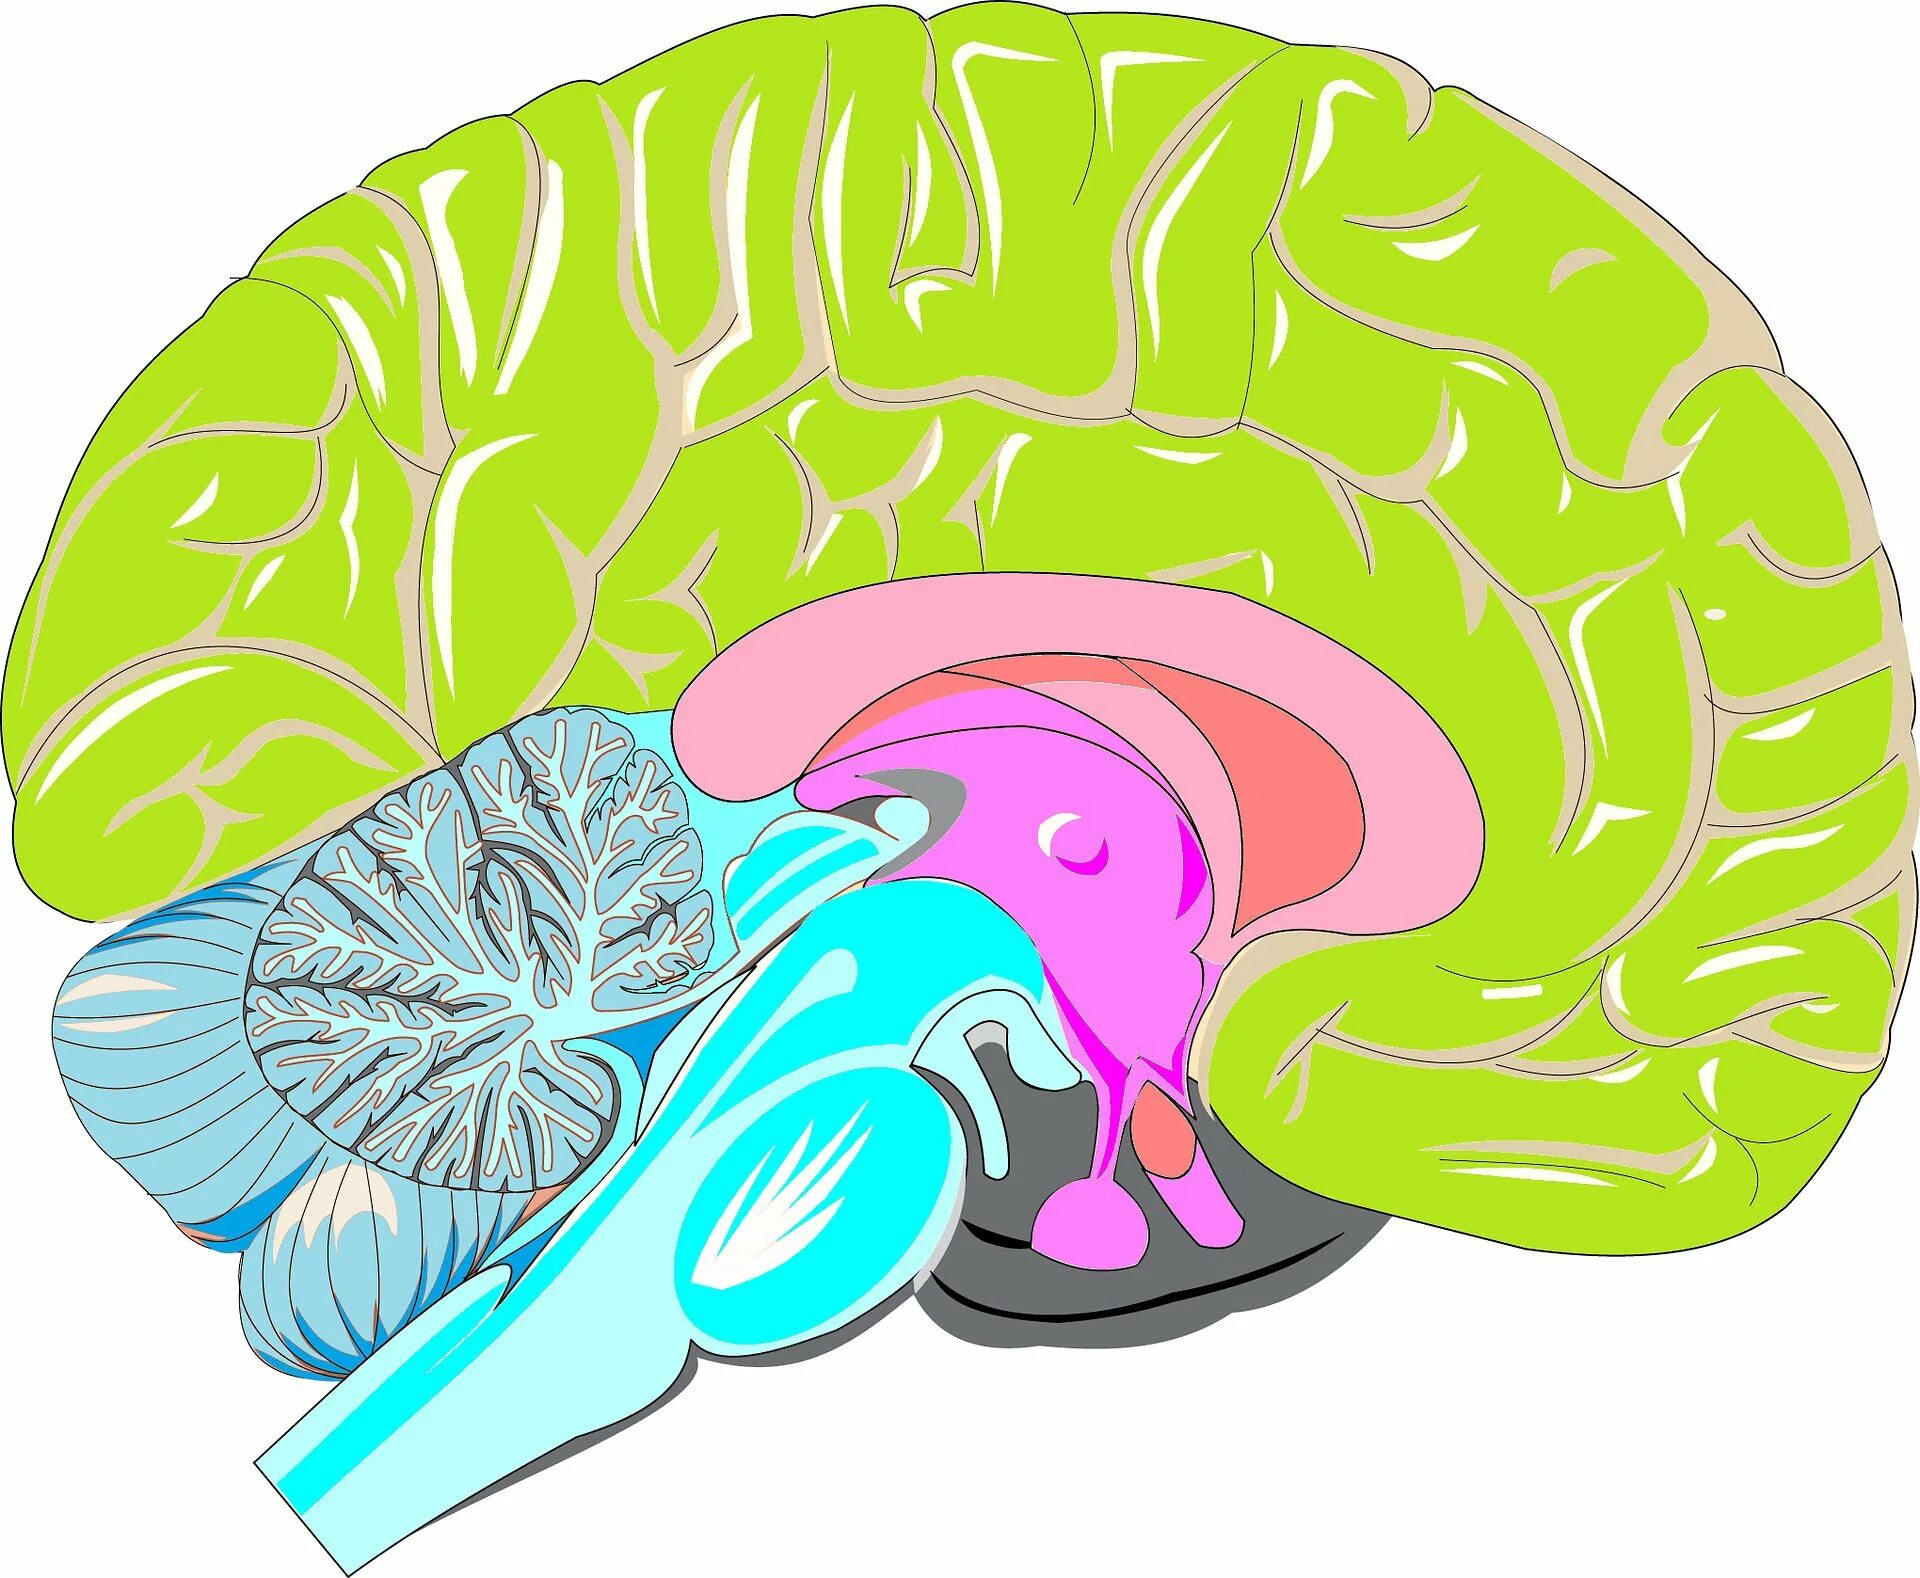 F brain. Мозг картинка. Рисунок мозга человека неокортексом.